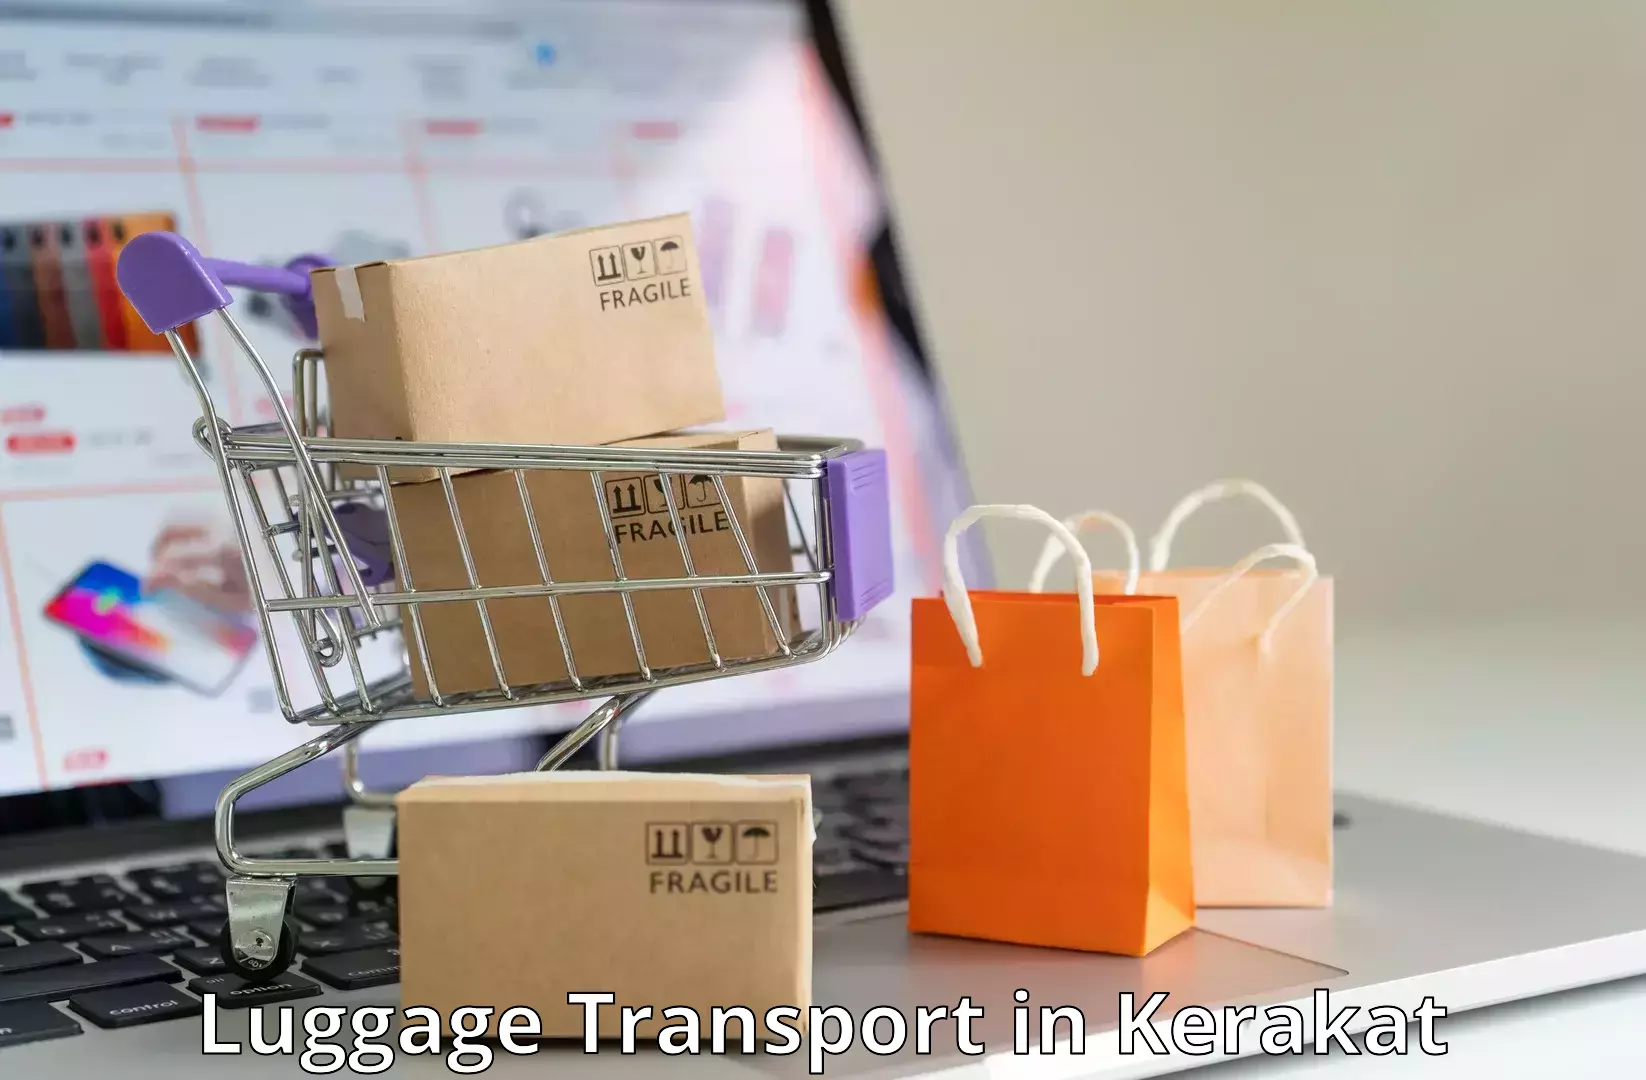 Luggage transport solutions in Kerakat